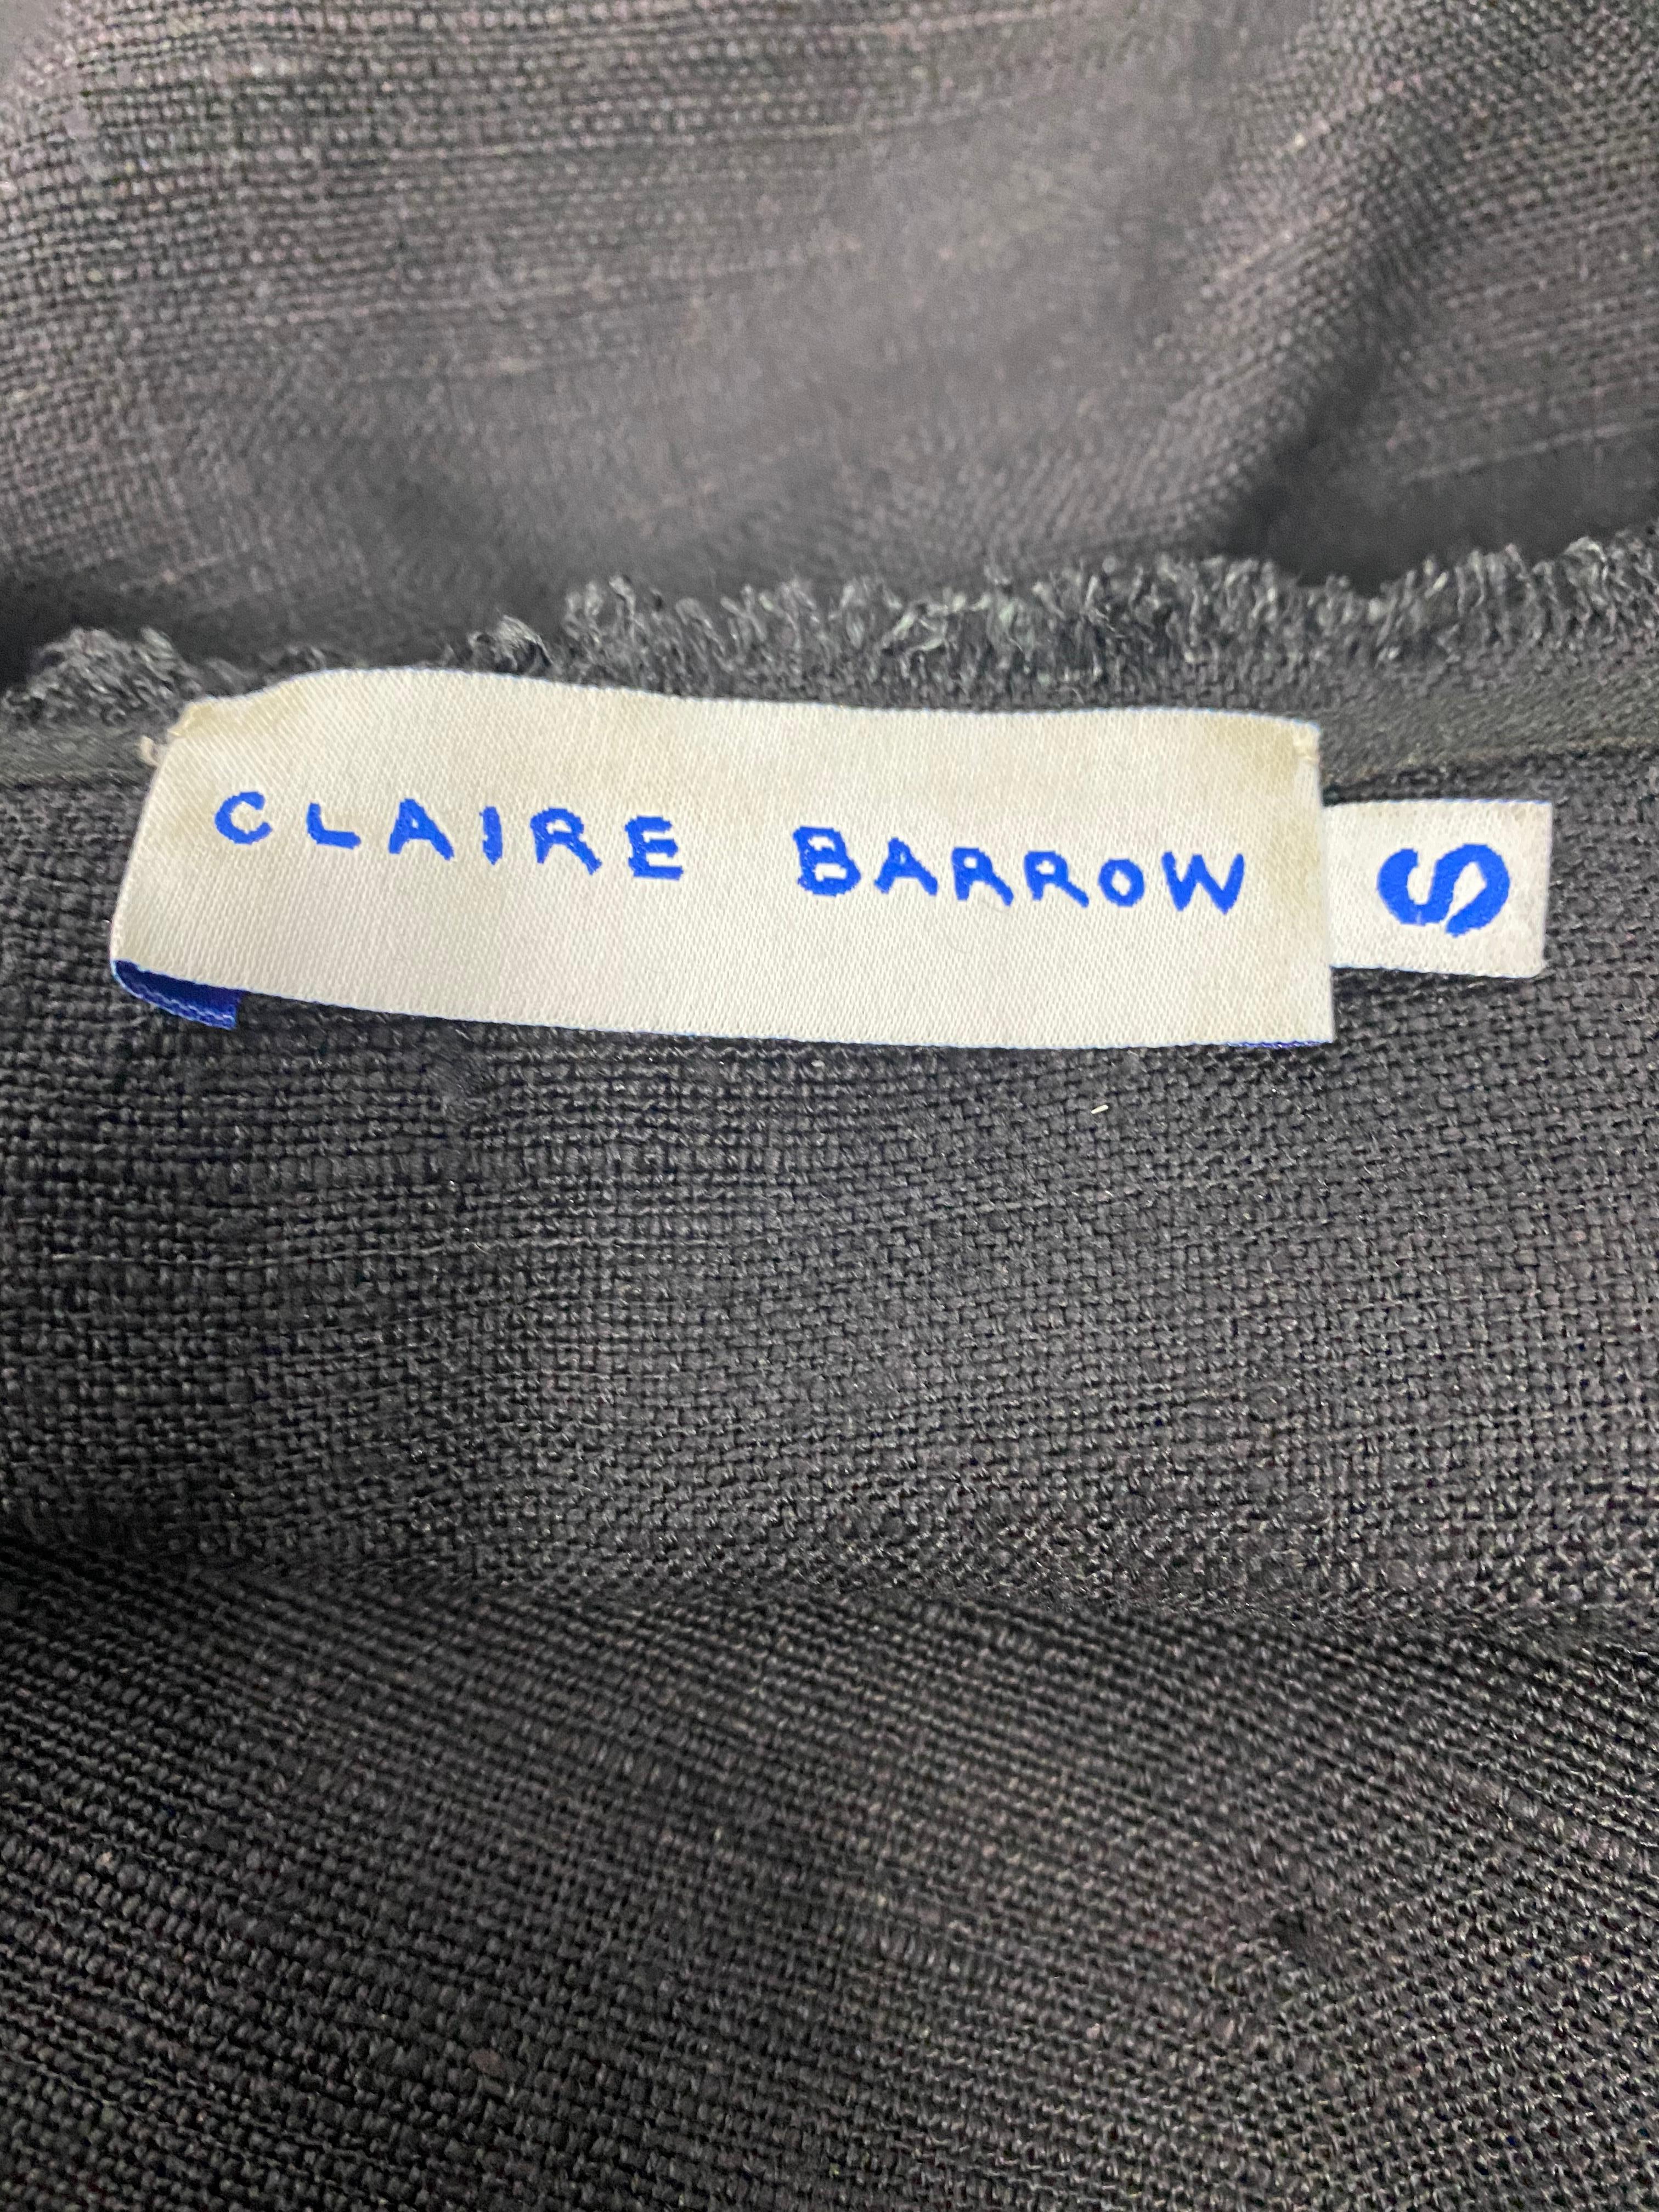 Claire Barrow Black Silk Top, Size Small 4